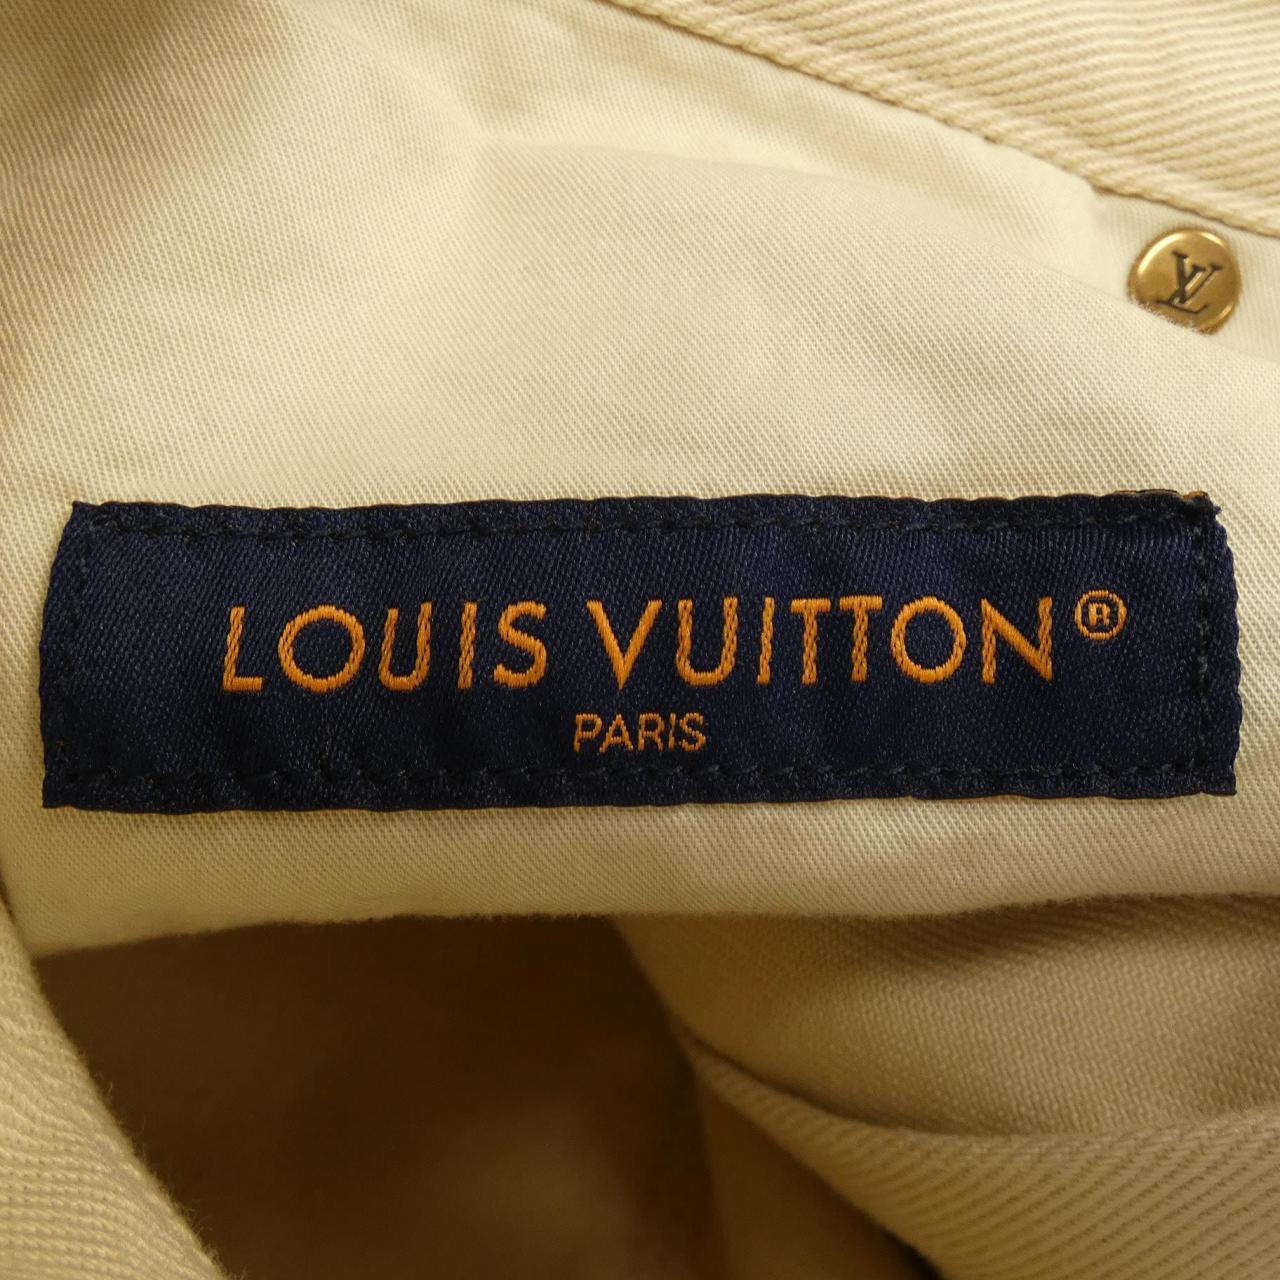 LOUIS VUITTON牛仔裤